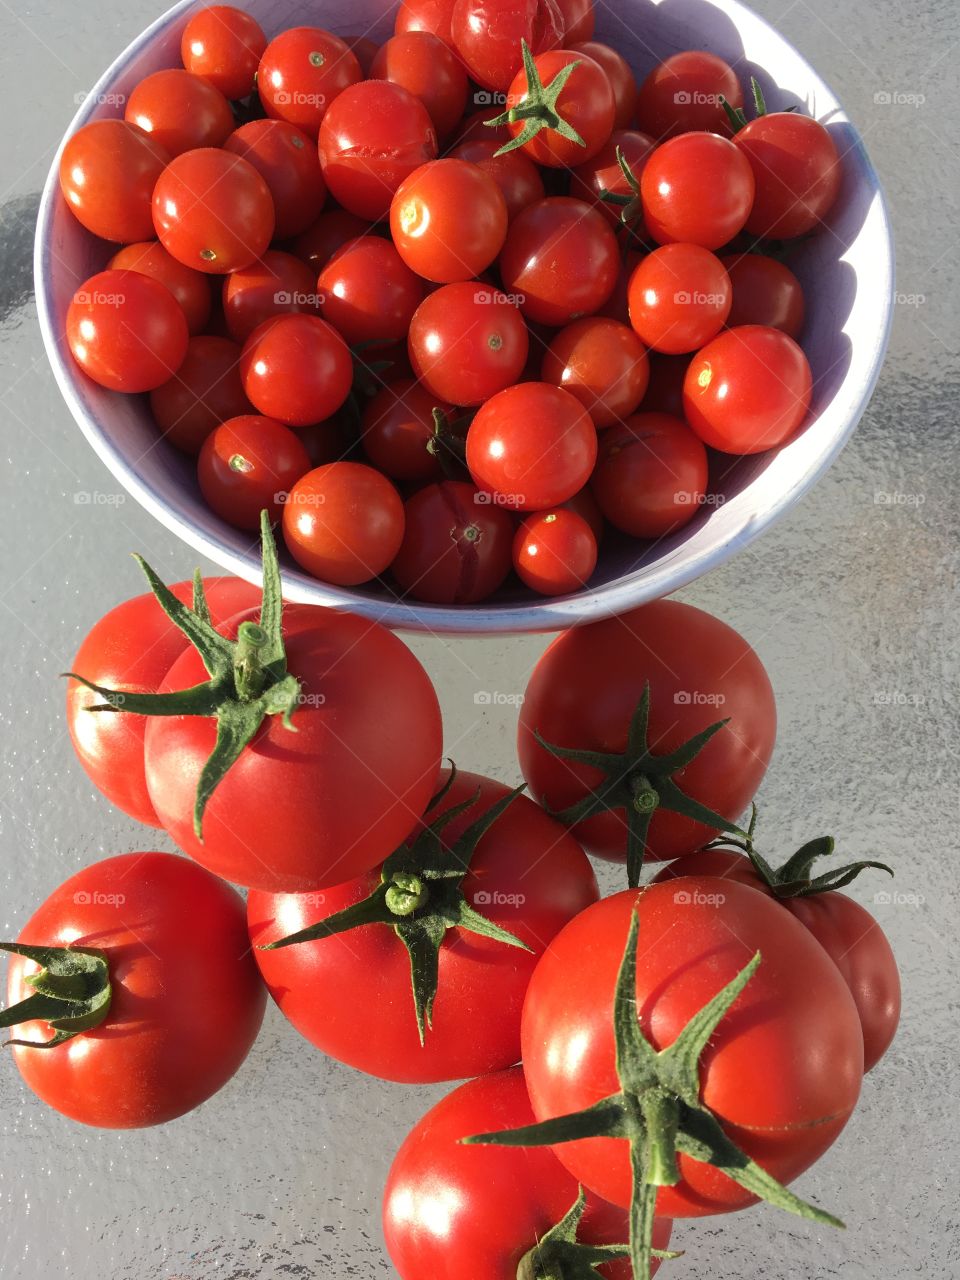 Homegrown garden tomatoes 